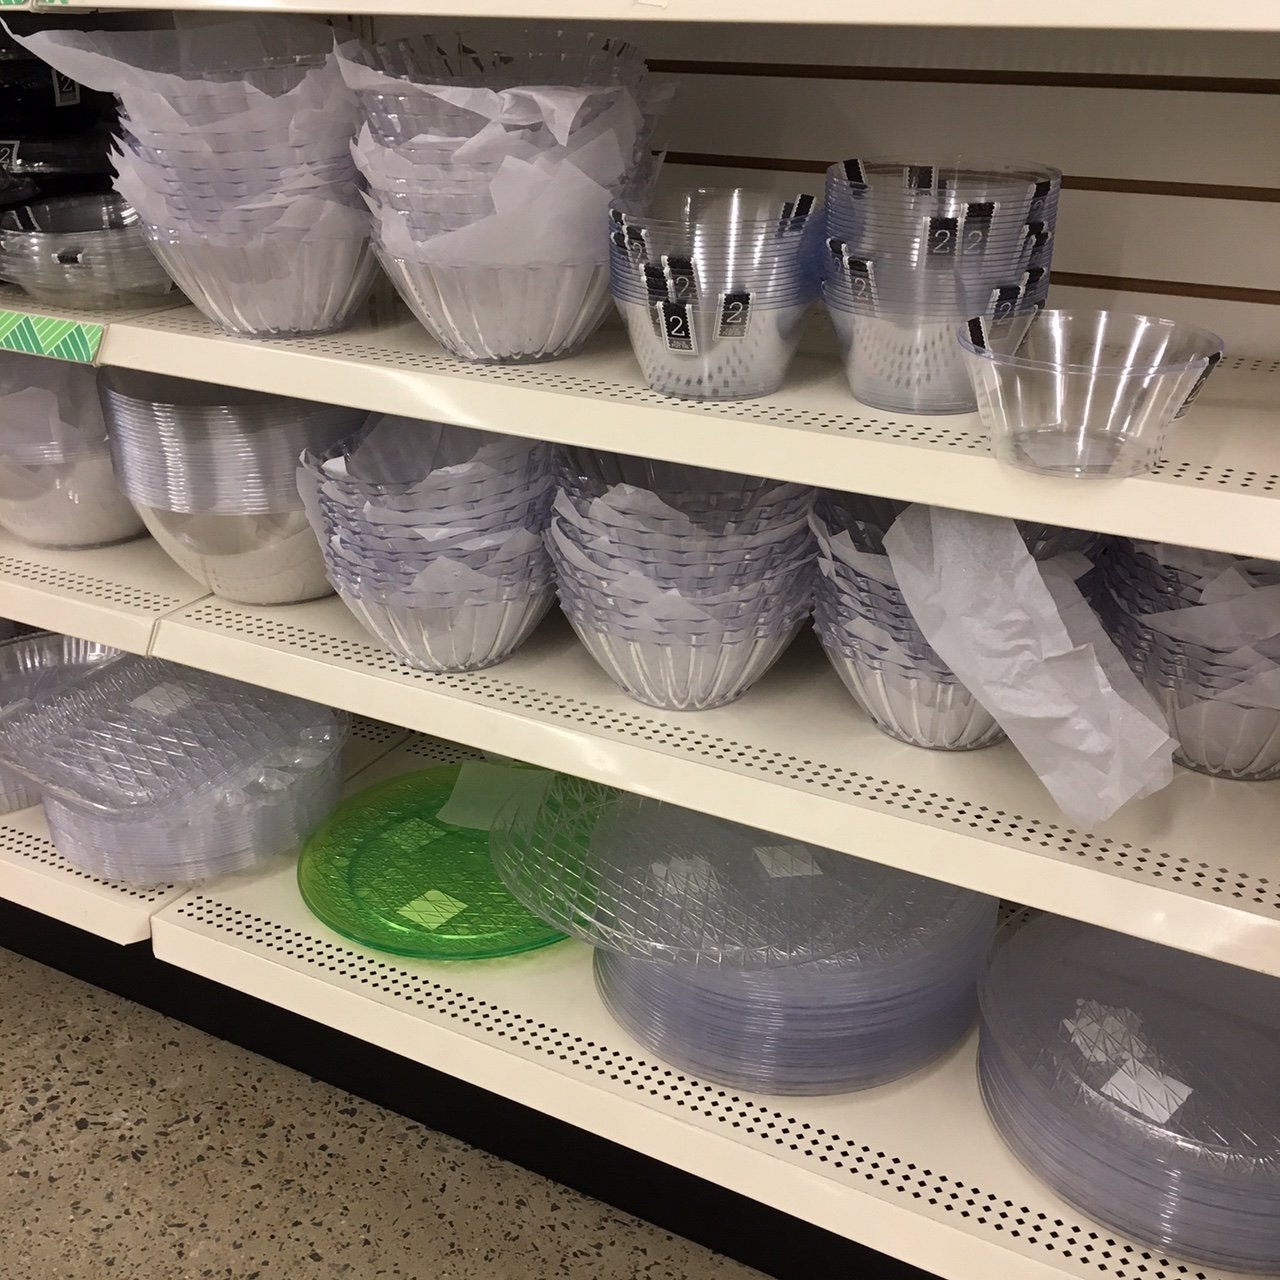 plastic serving ware at Dollar Tree